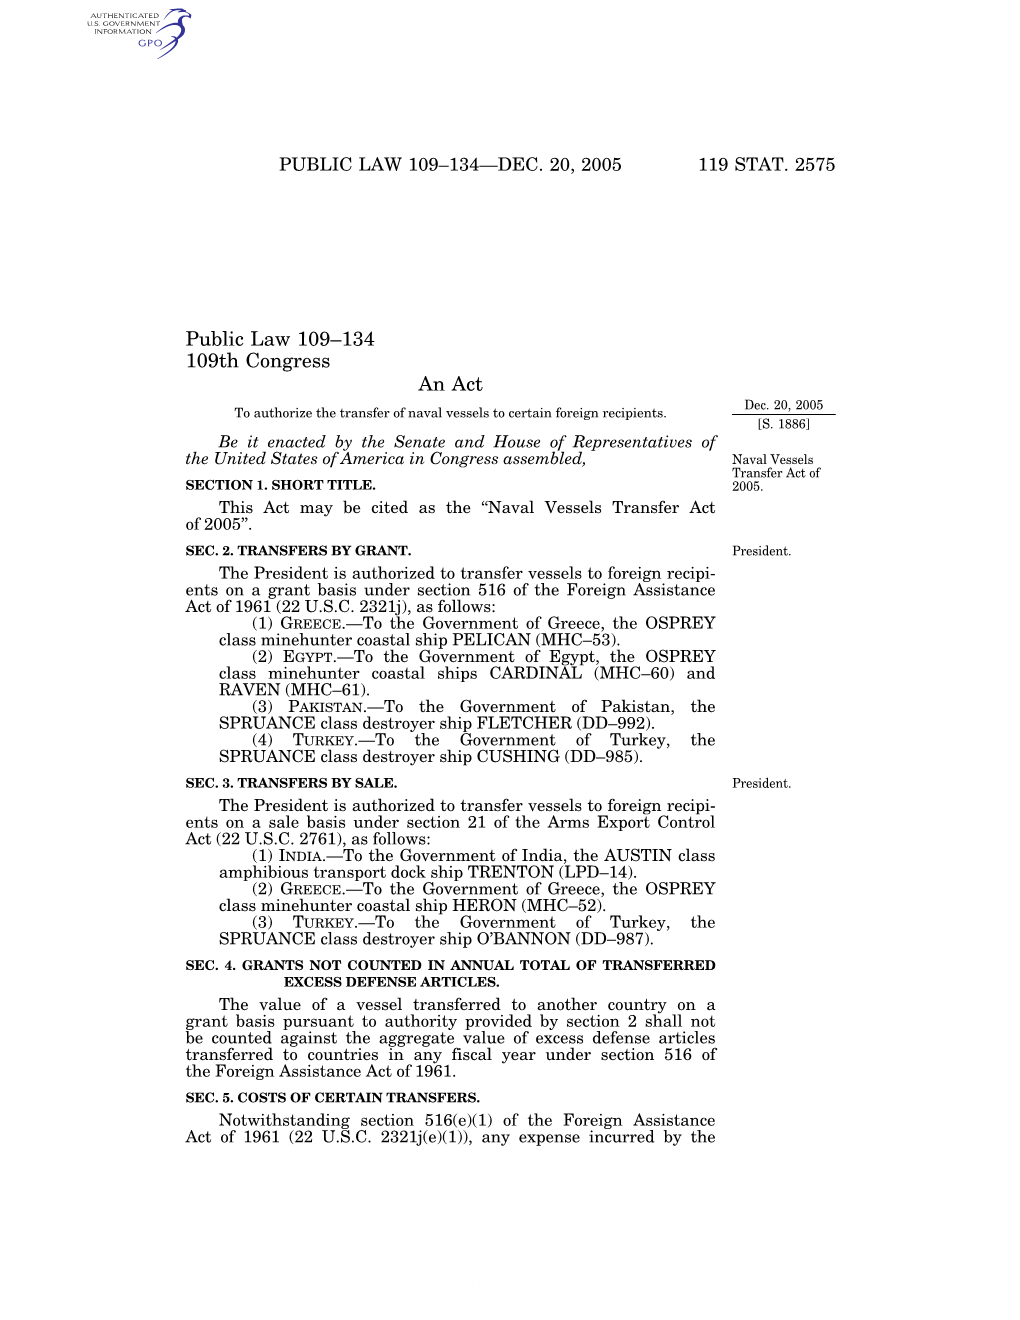 Public Law 109–134 109Th Congress an Act Dec